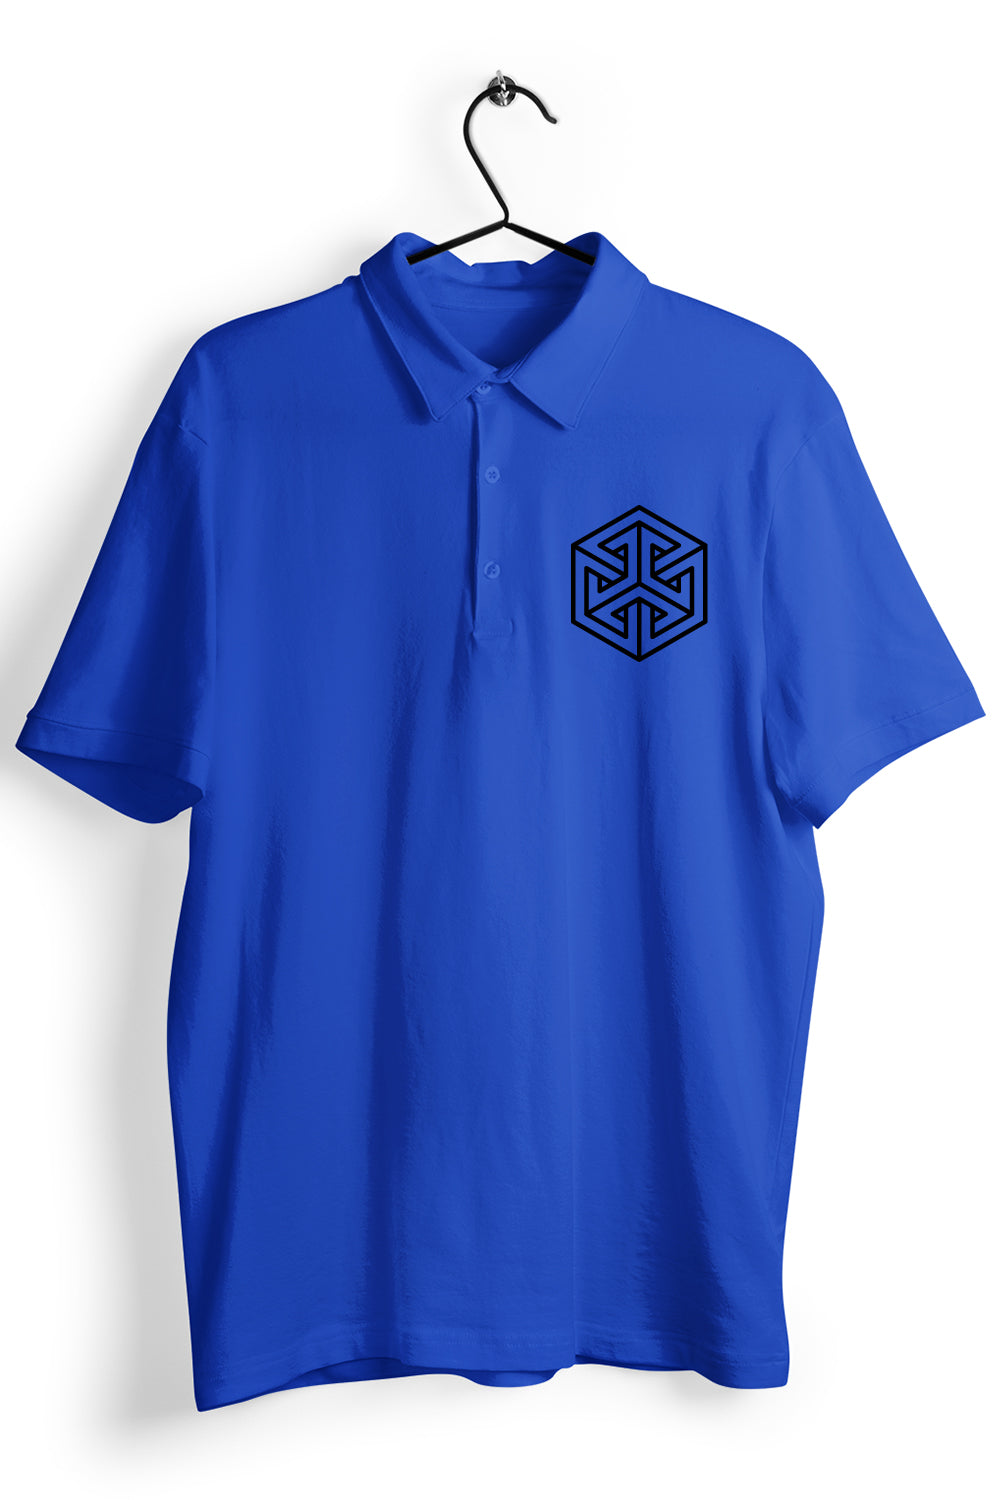 Locked Graphic Pocket Printed Blue Polo Shirt